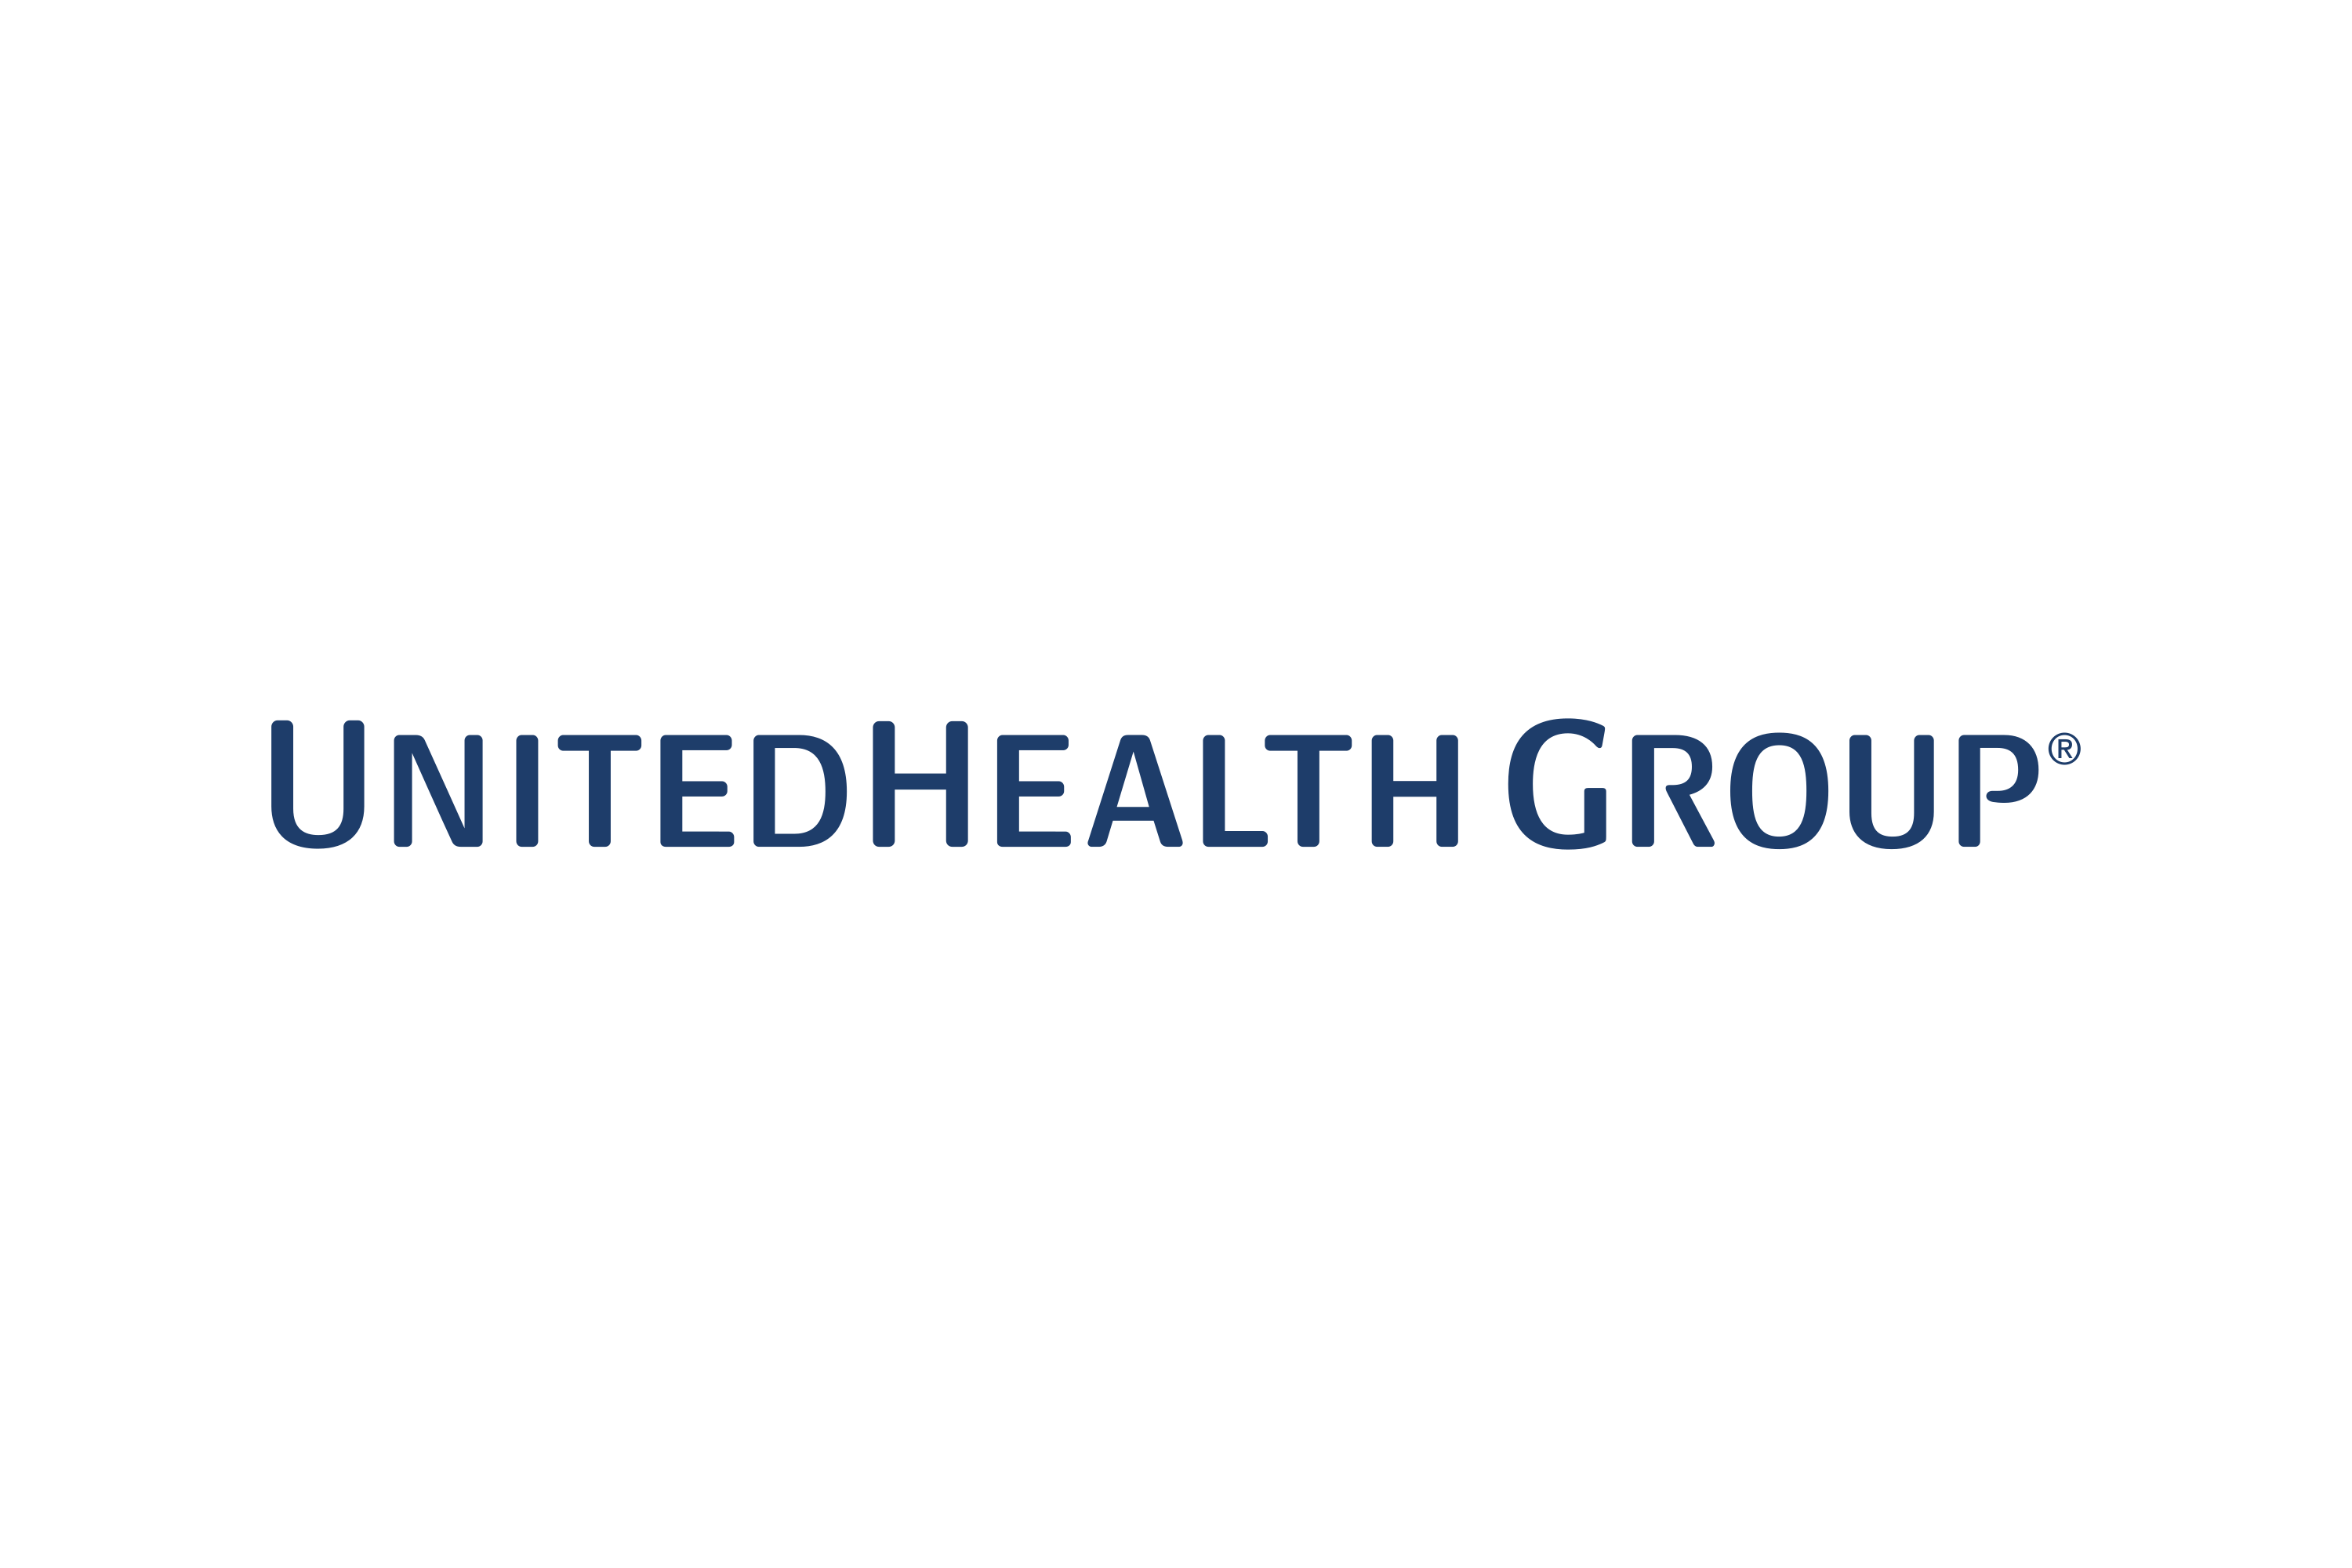 Download UnitedHealth Group Logo in SVG Vector or PNG File Format